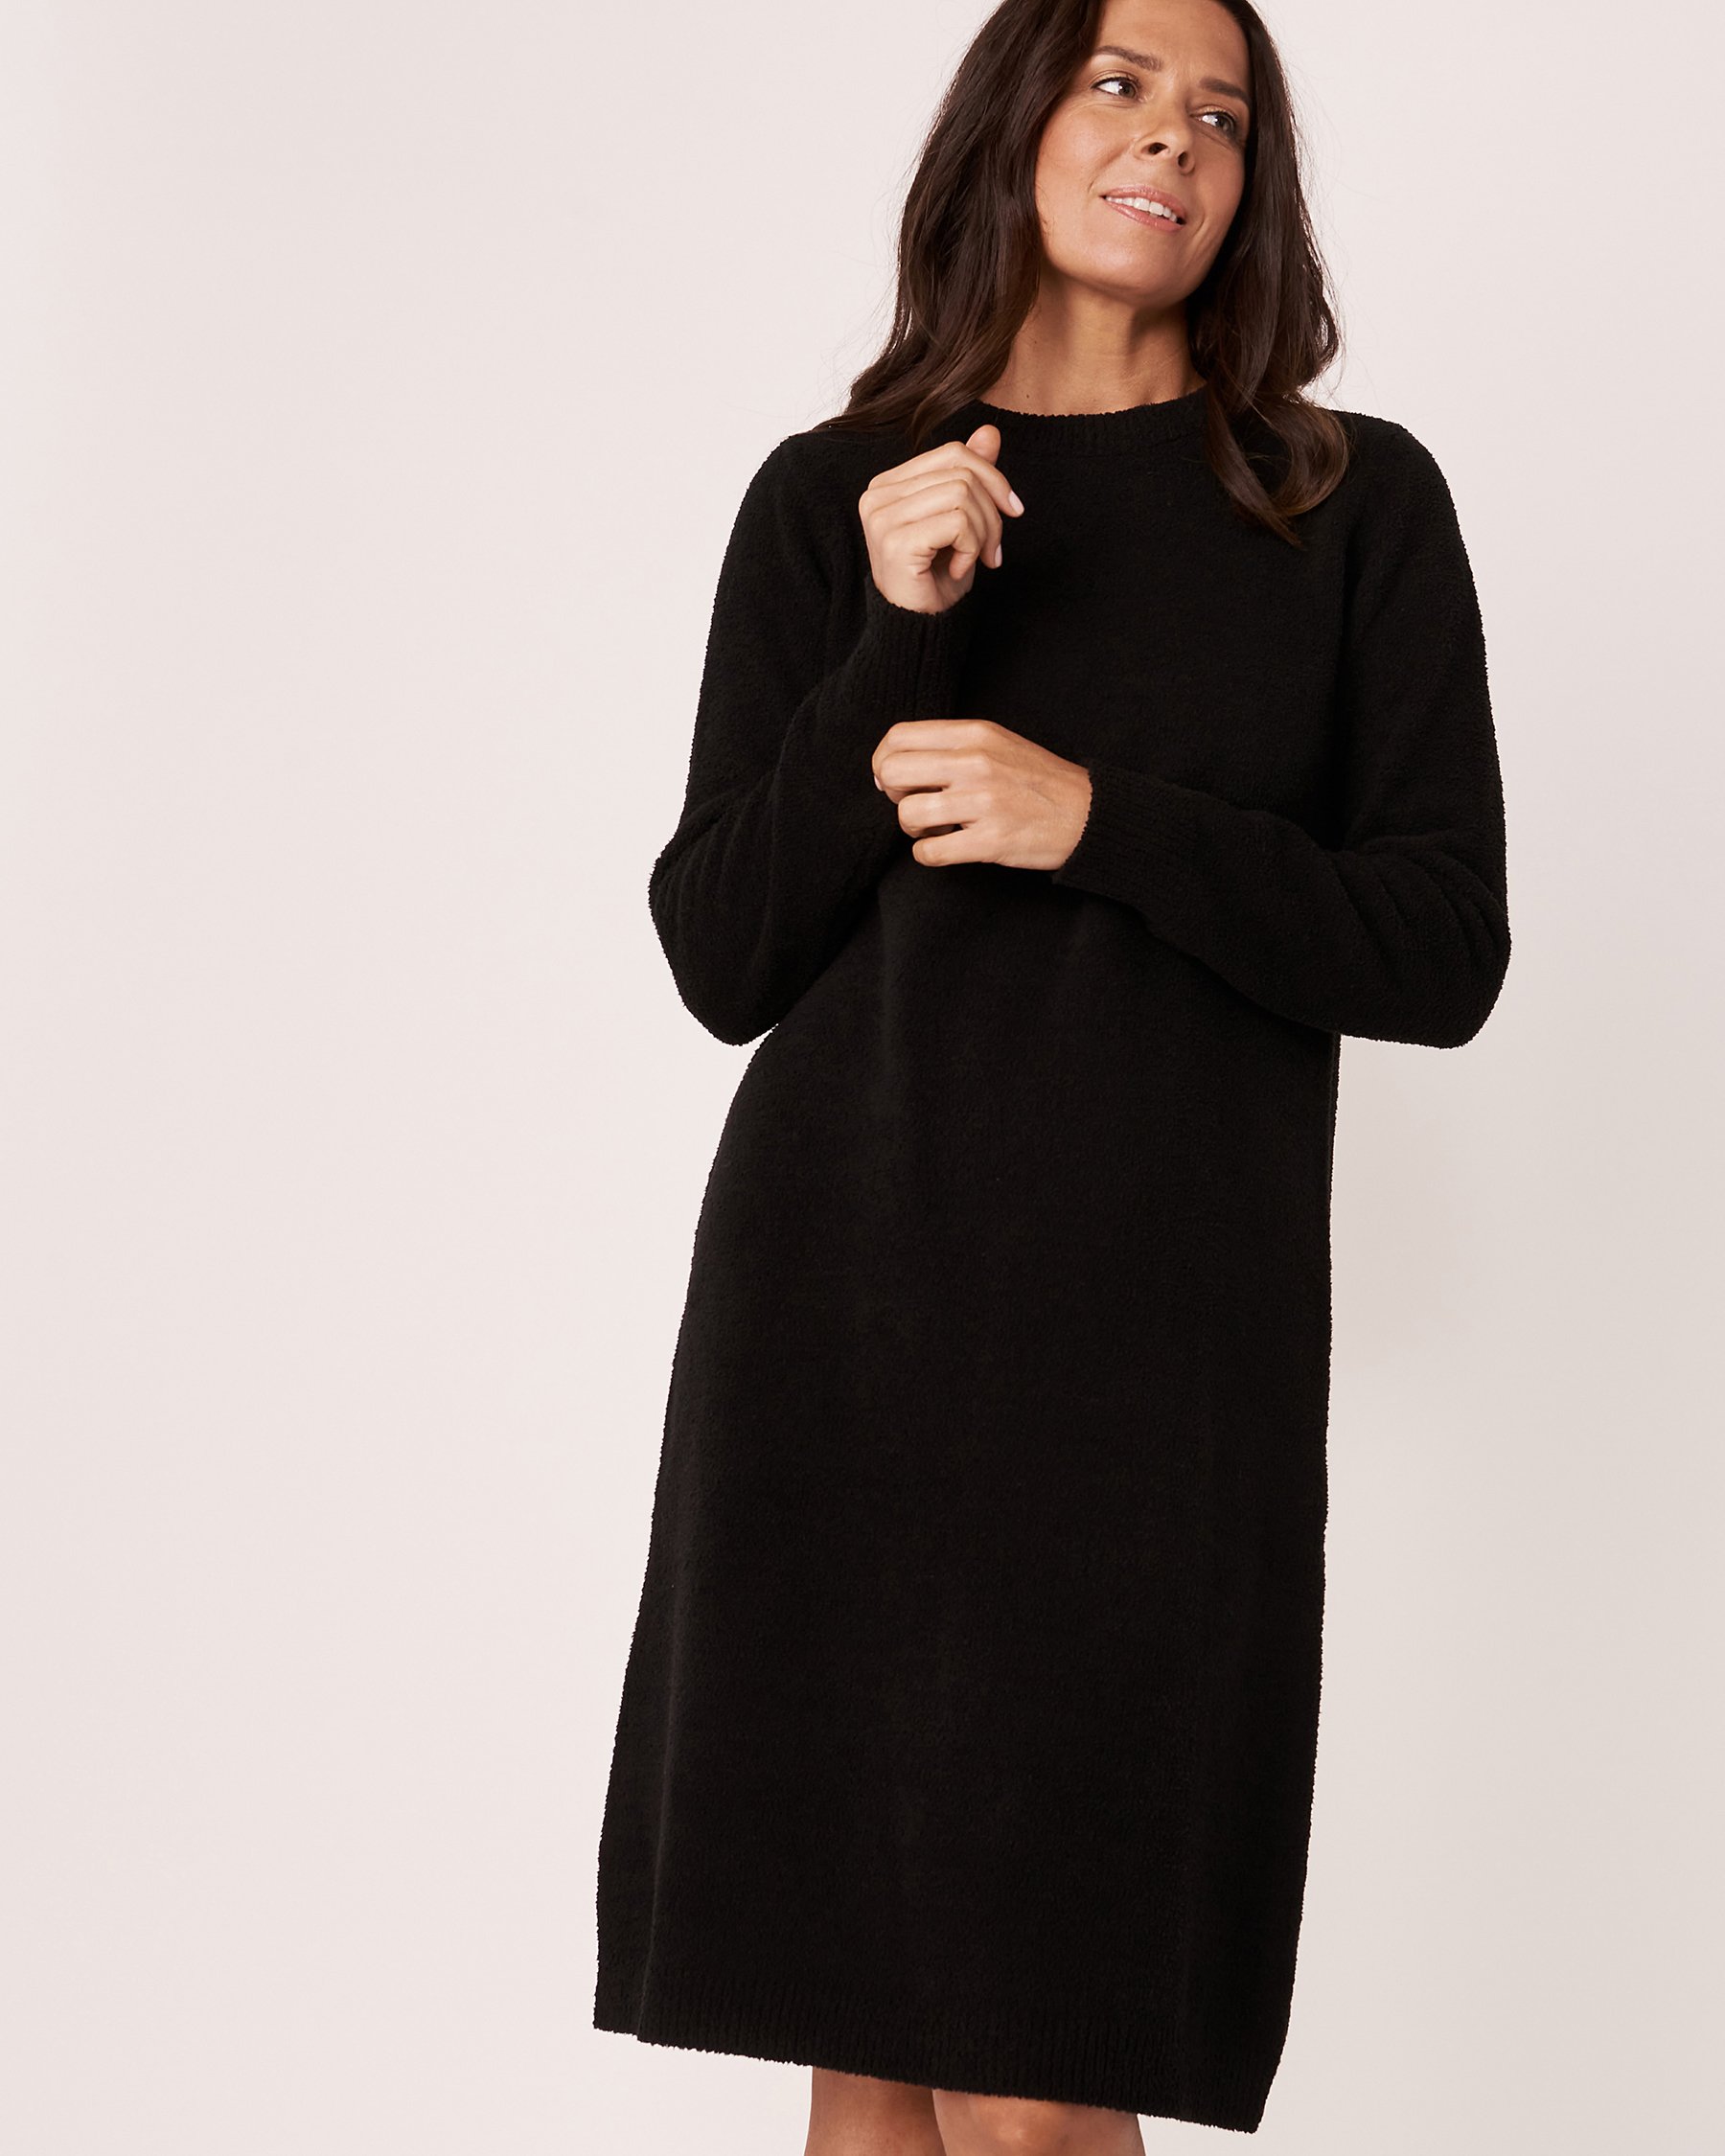 LA VIE EN ROSE Chenille Long Sleeve Dress Black 50400011 - View1